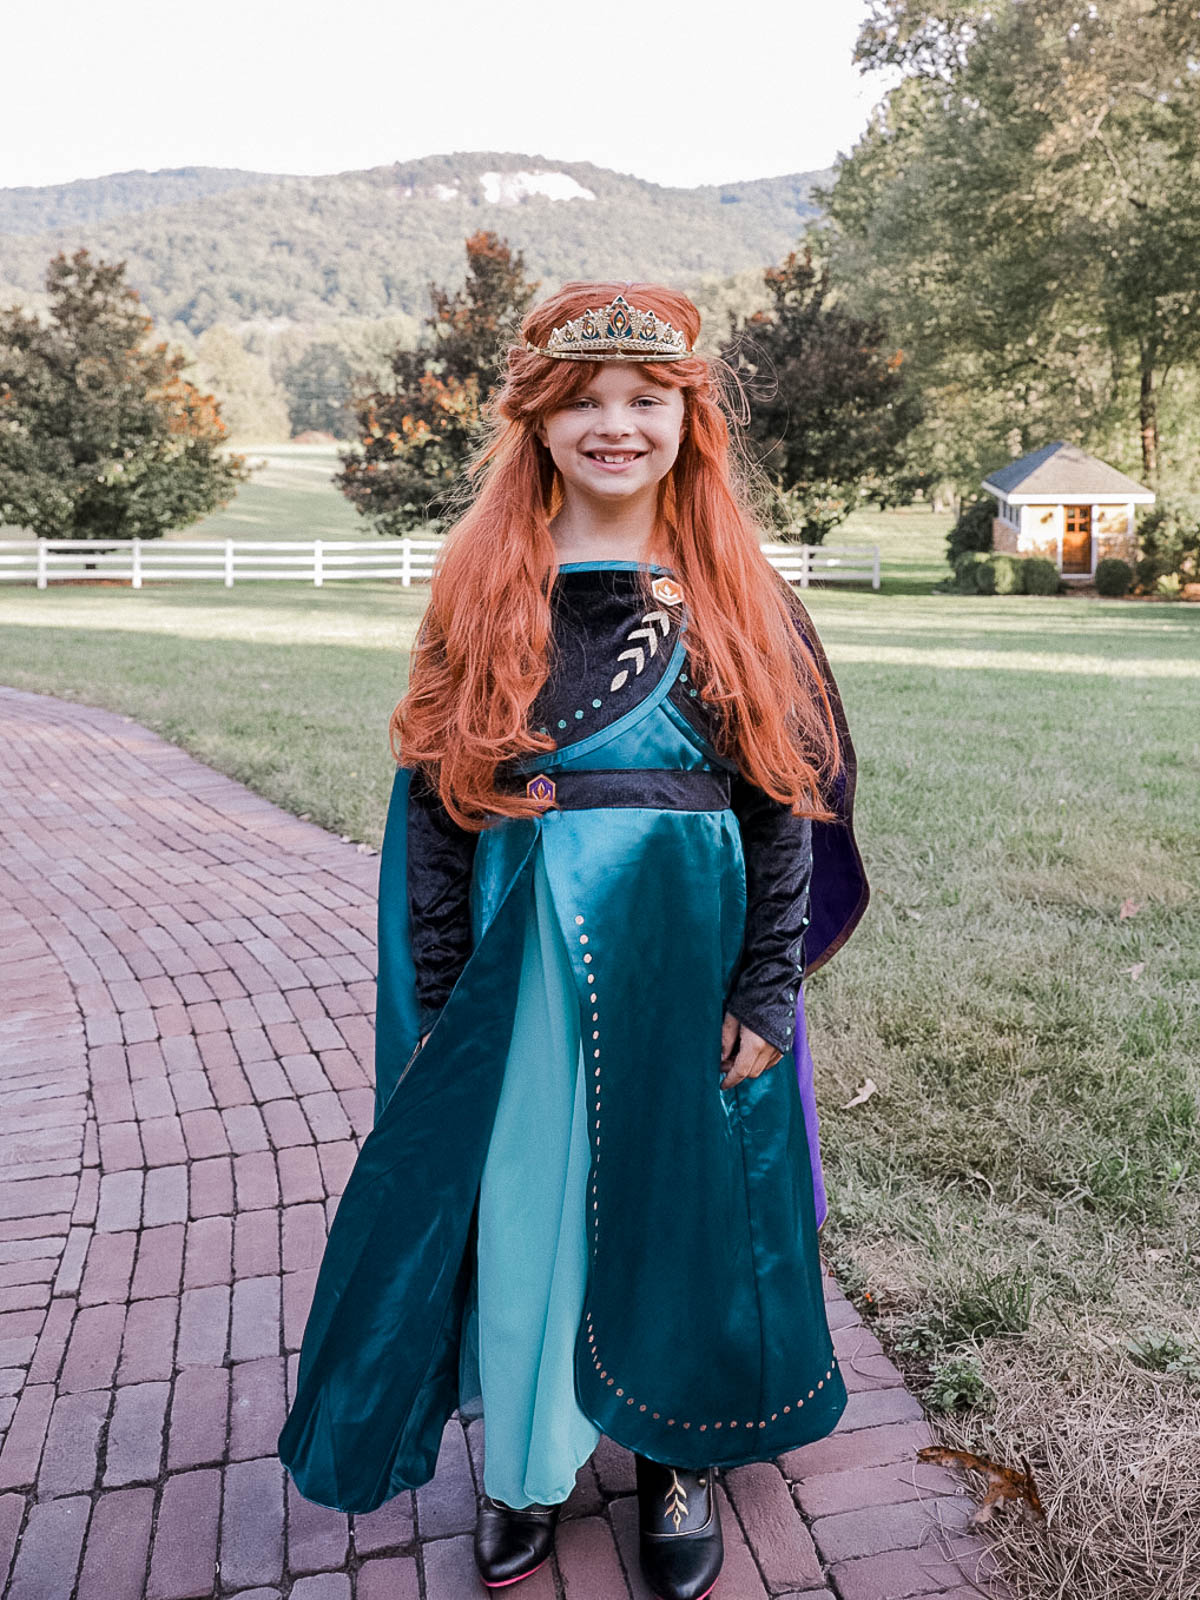 Hayden's Anna costume for a Frozen Halloween